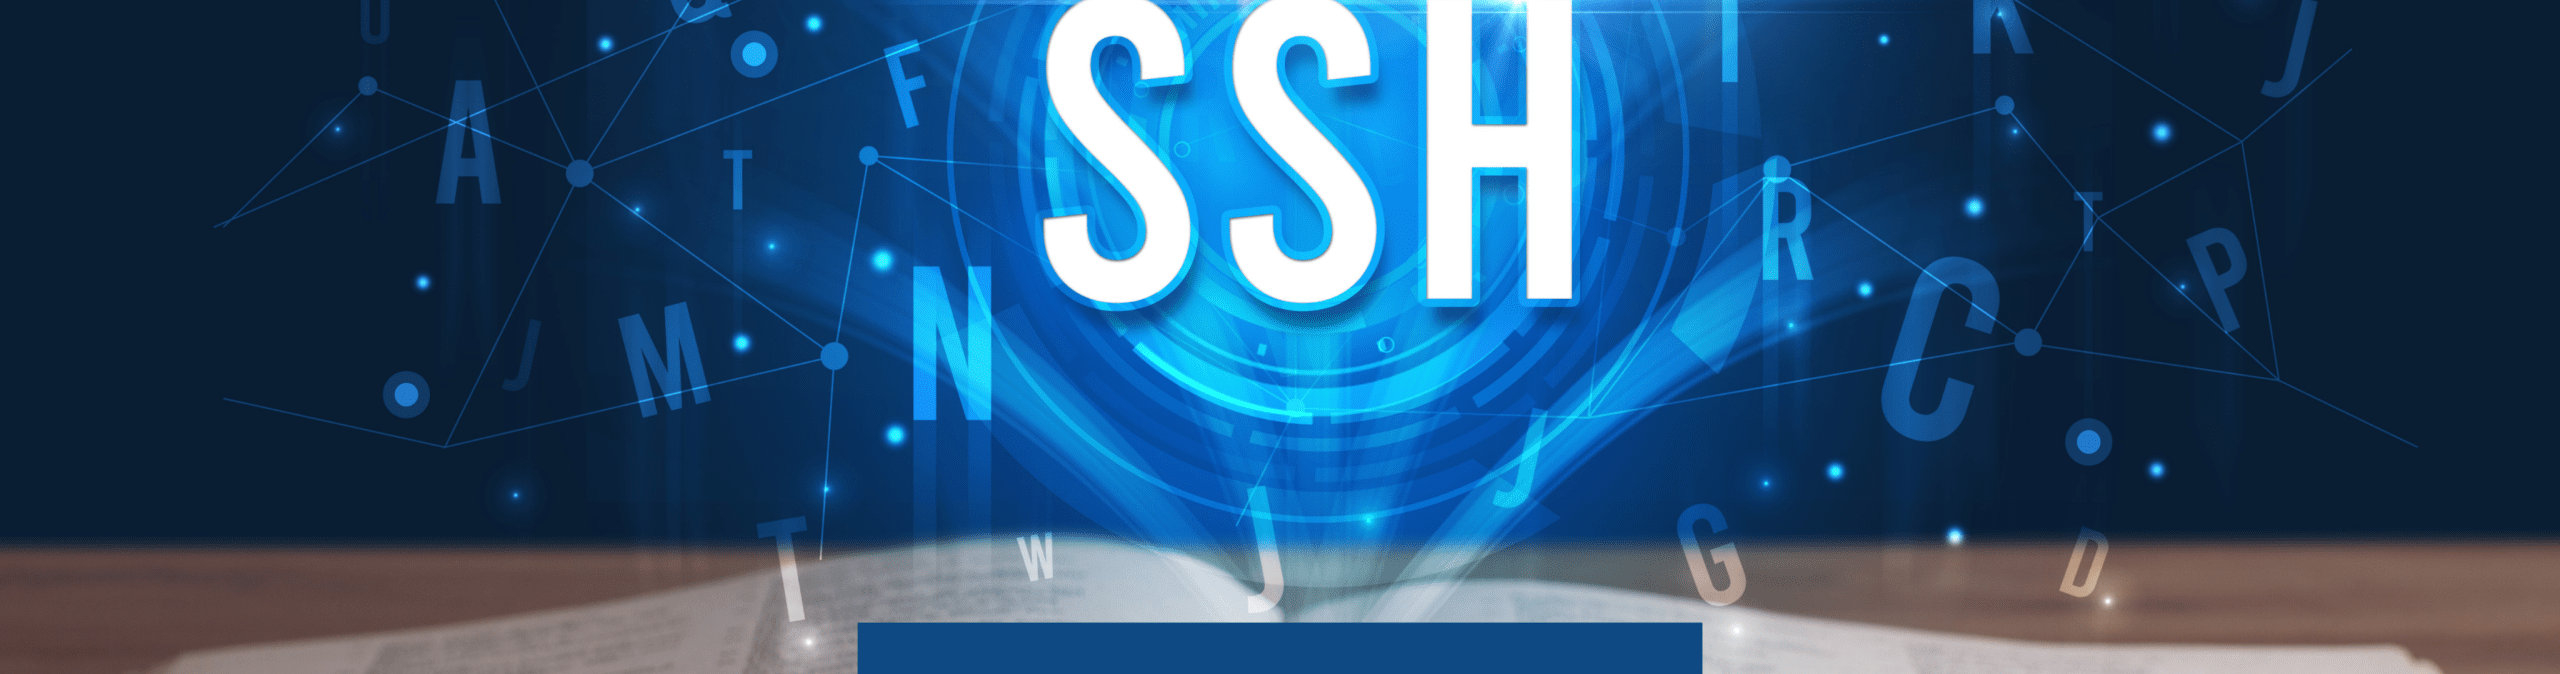 SSH summerschool jump hosts en file transferring hero image